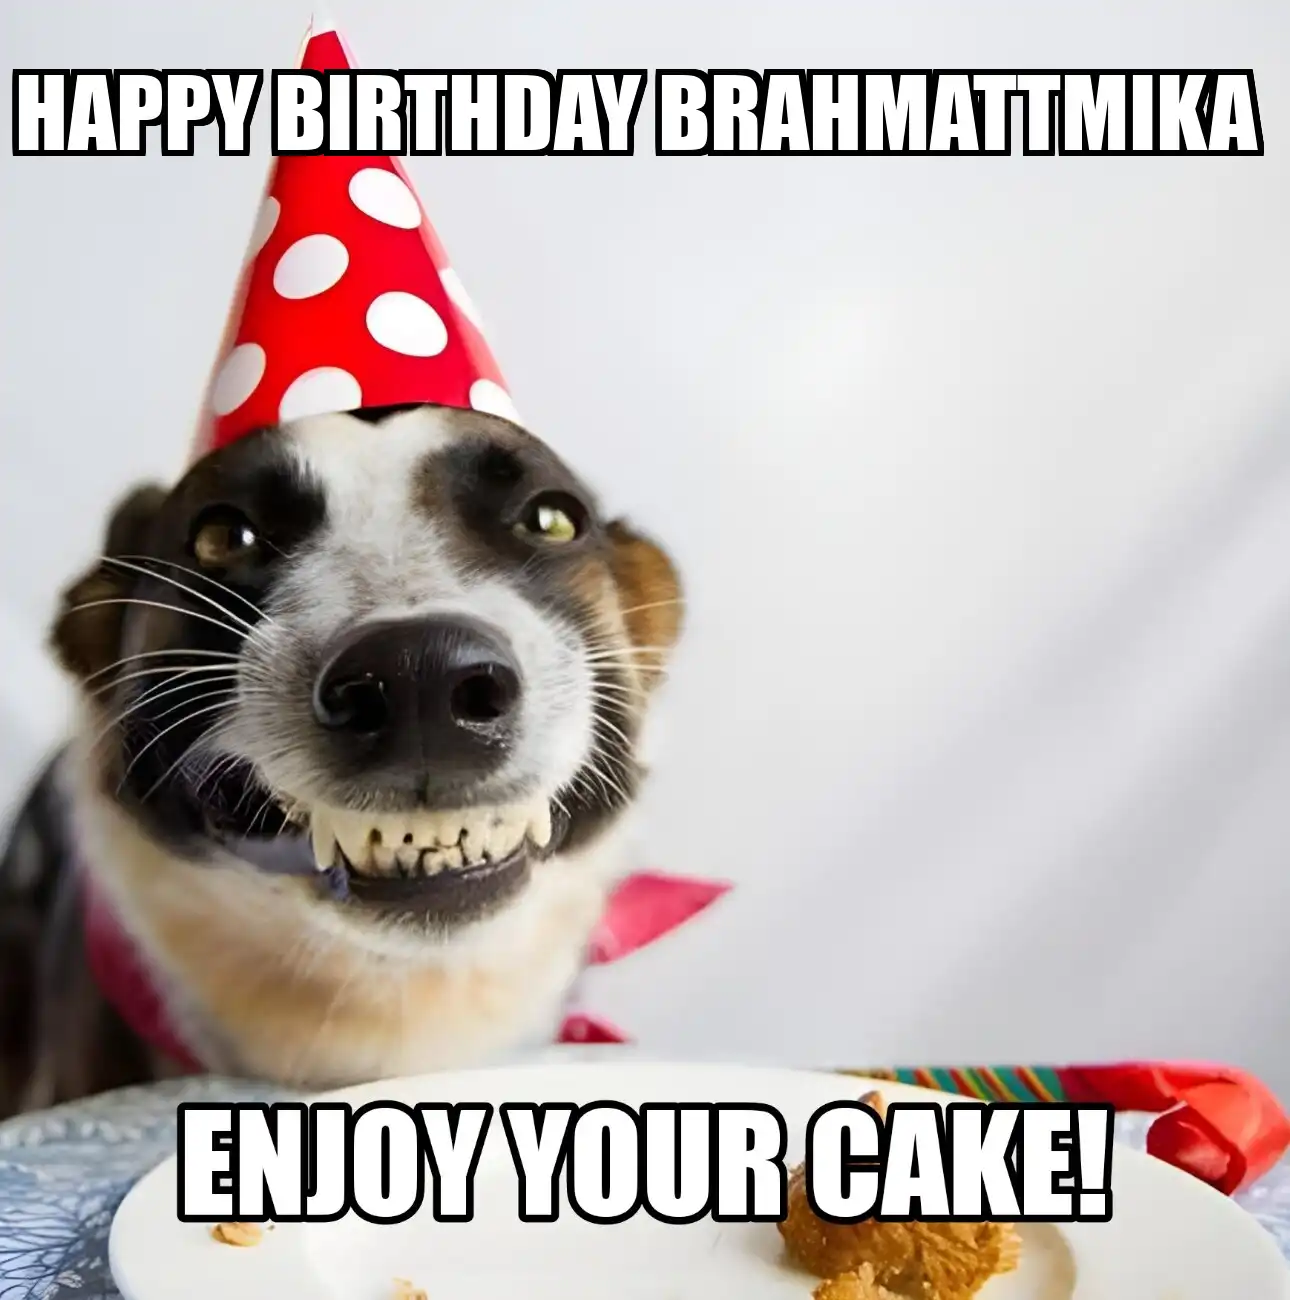 Happy Birthday Brahmattmika Enjoy Your Cake Dog Meme